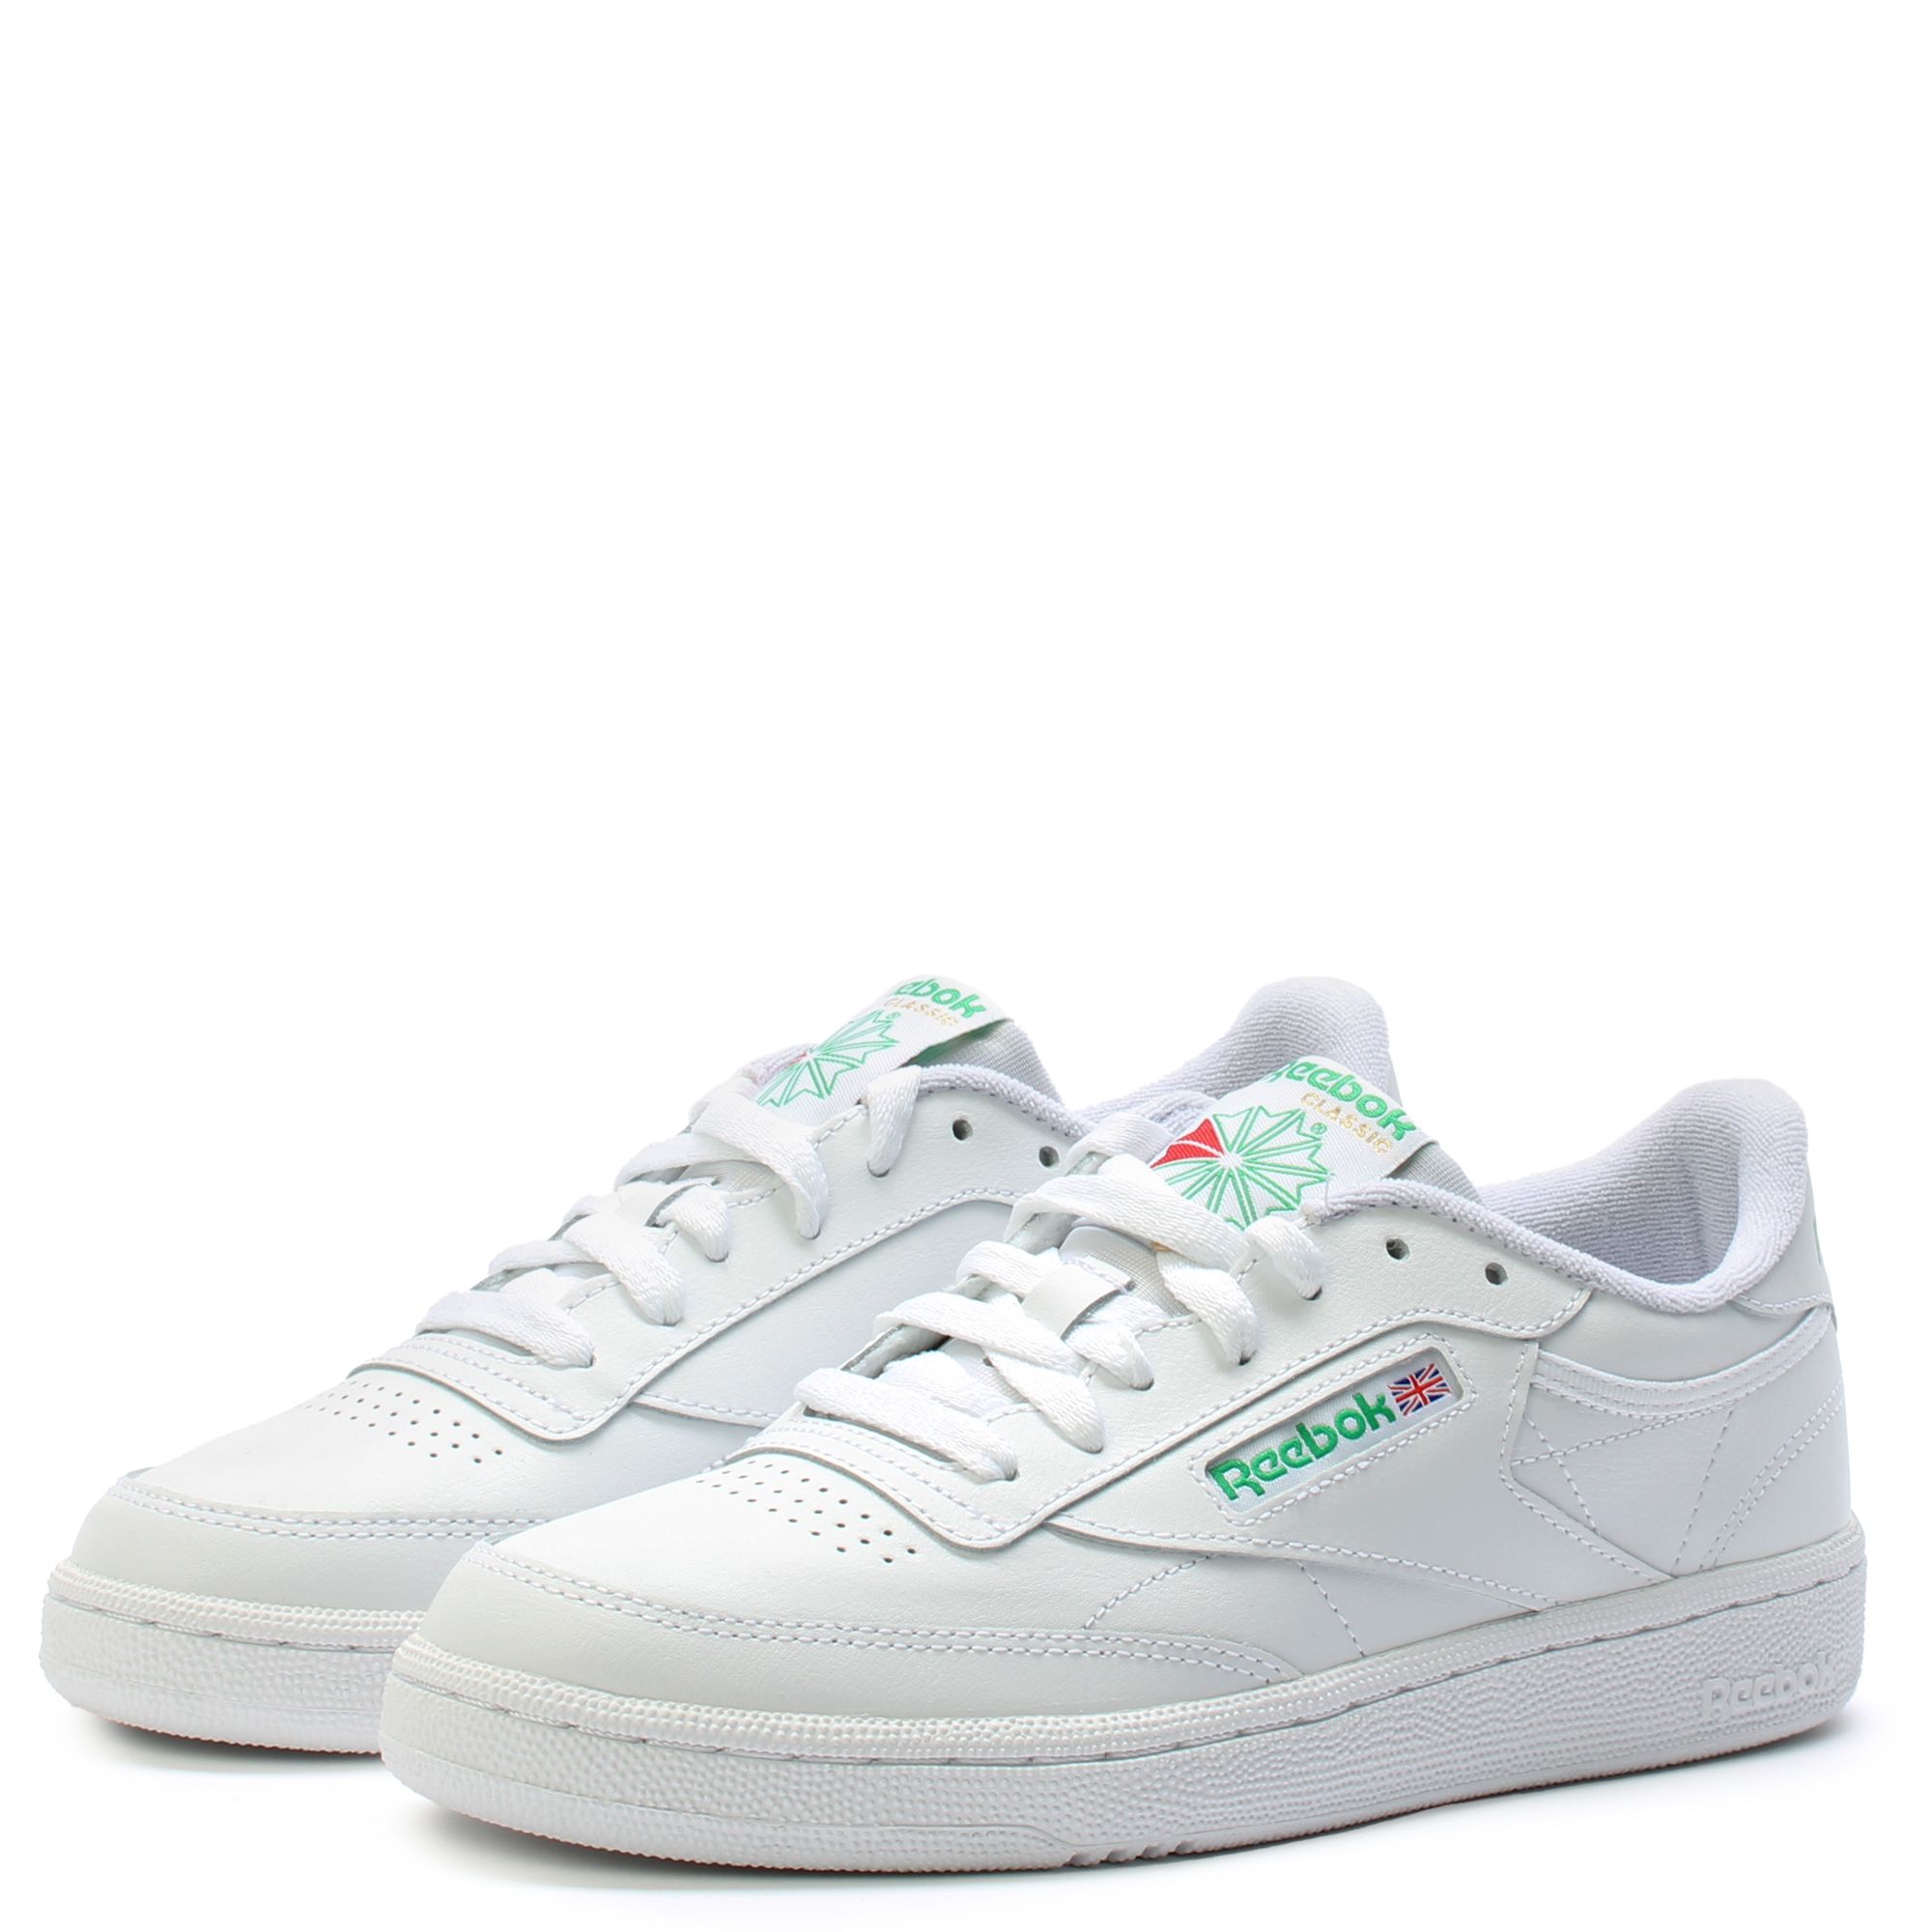 Club C 85 Shoes - White / Green